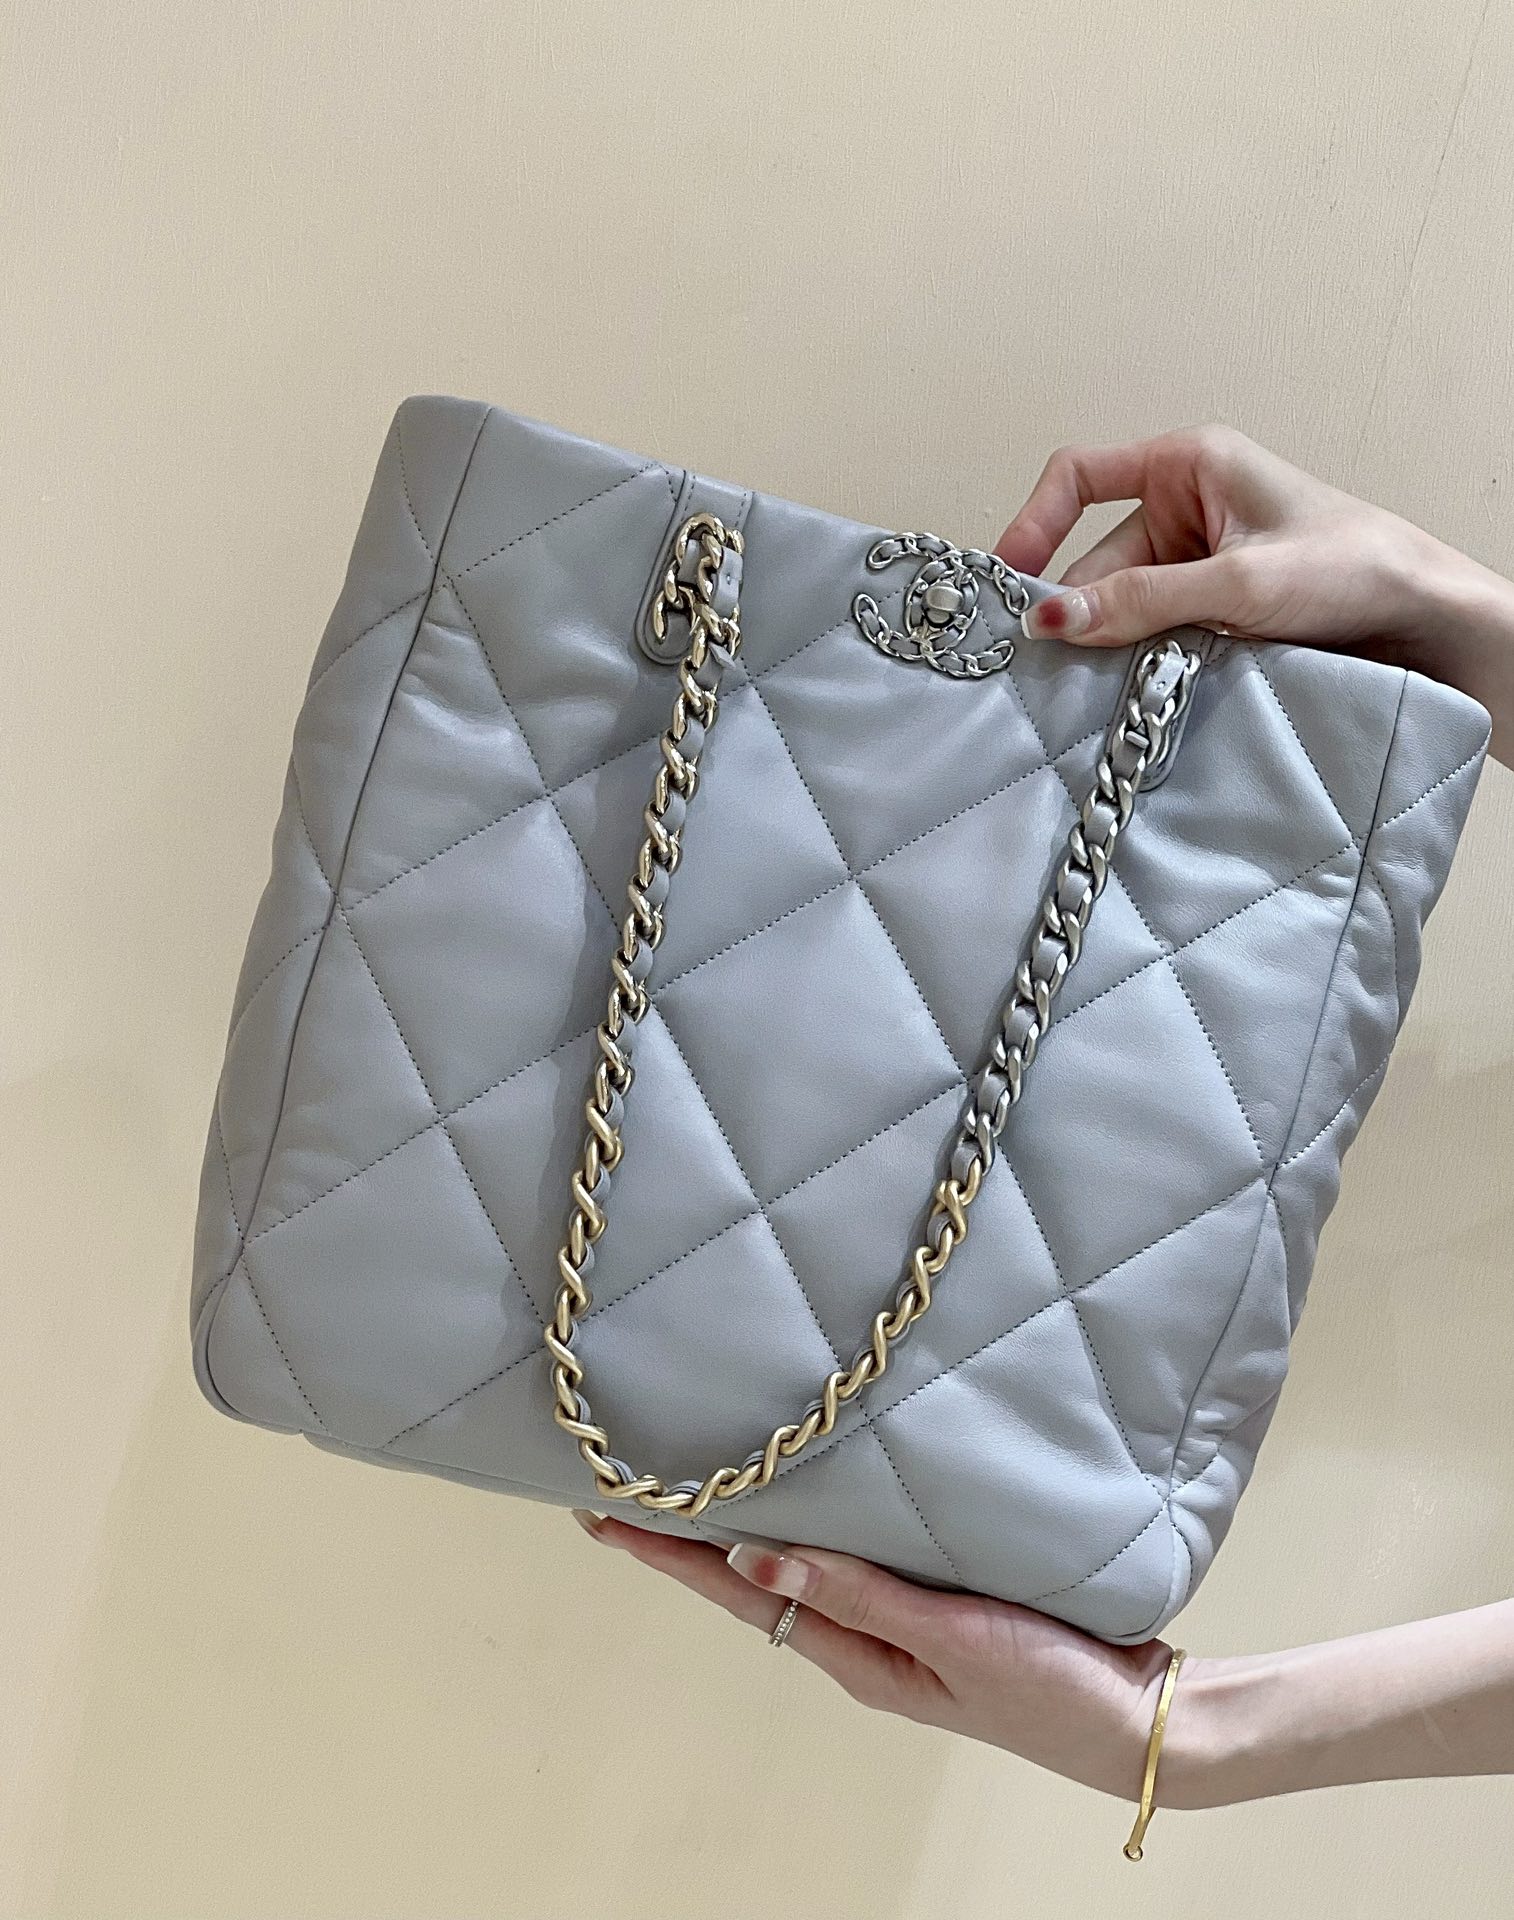 CHANEL  Bags  Chanel Large Easy Shopping Tote Bag Light Grey  Poshmark